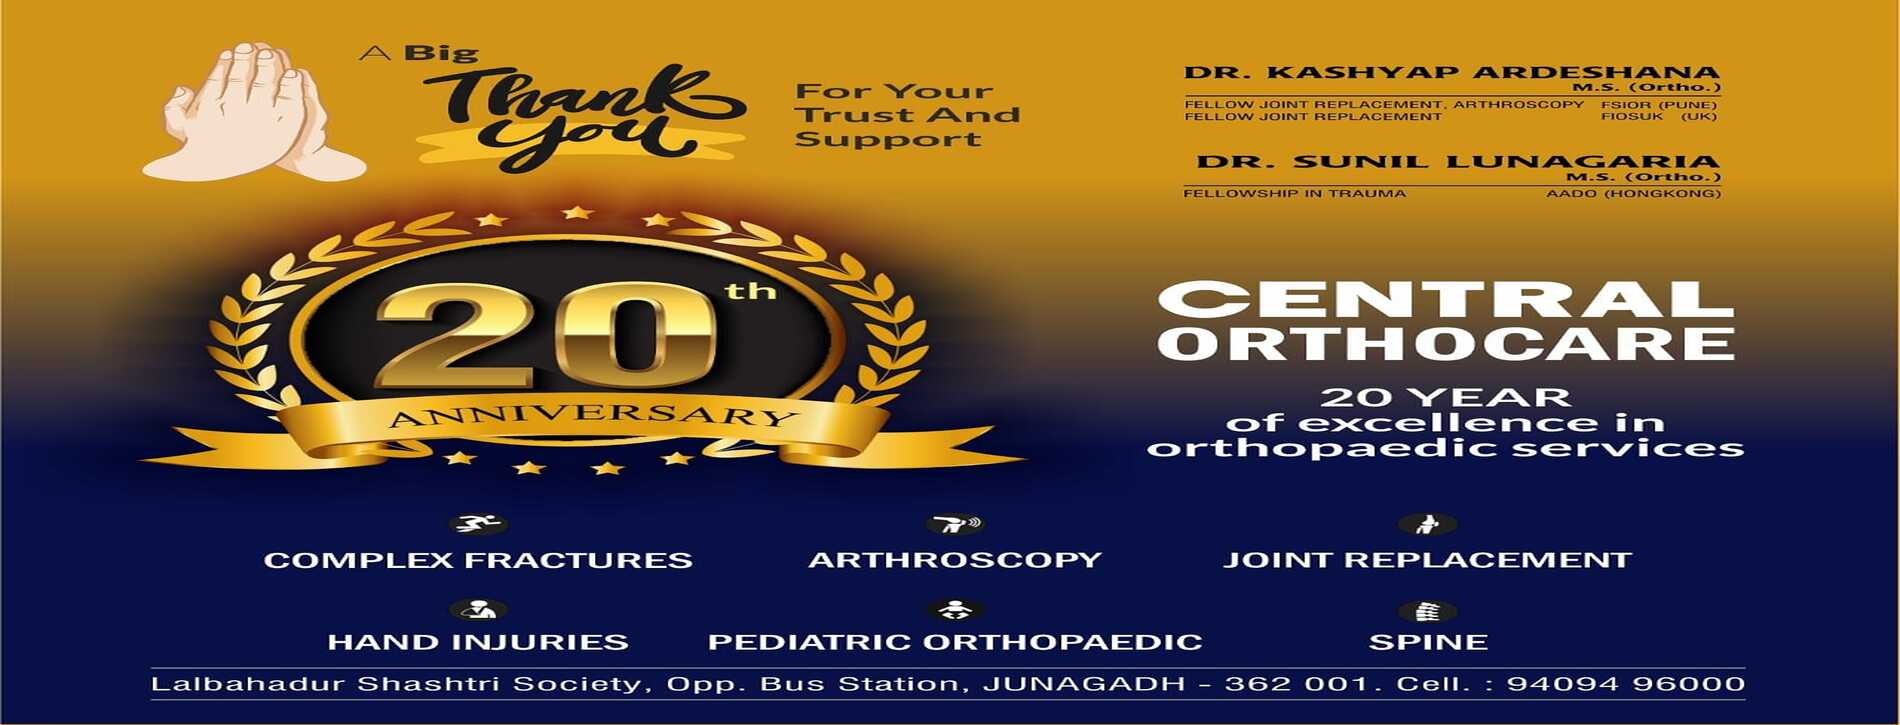 Site - Central Orthocare Surgeon Website